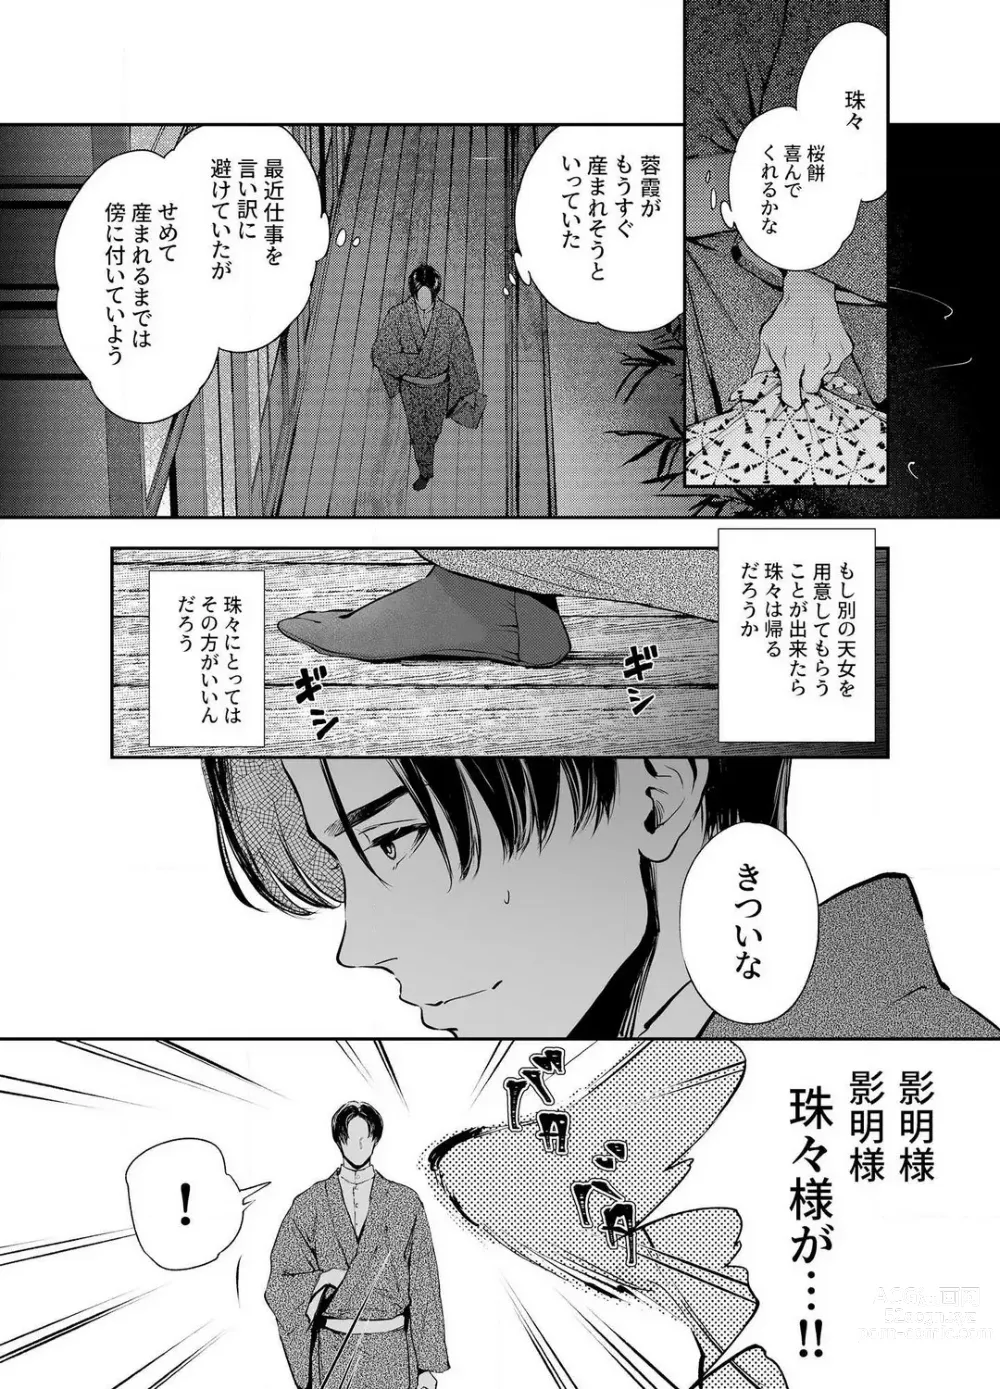 Page 121 of manga Katawa no Sakura 1-4